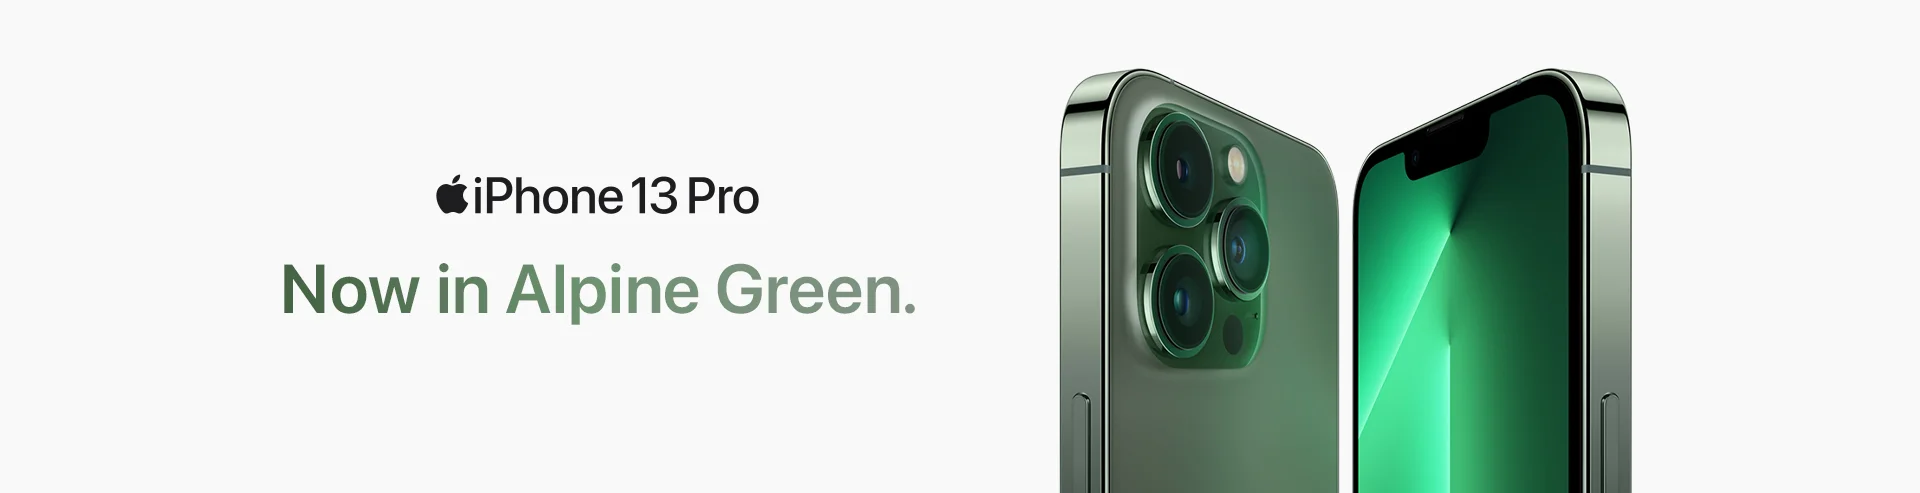 VM-Hero-iPhone-13-Pro-Alpine-Green-1920x493.webp